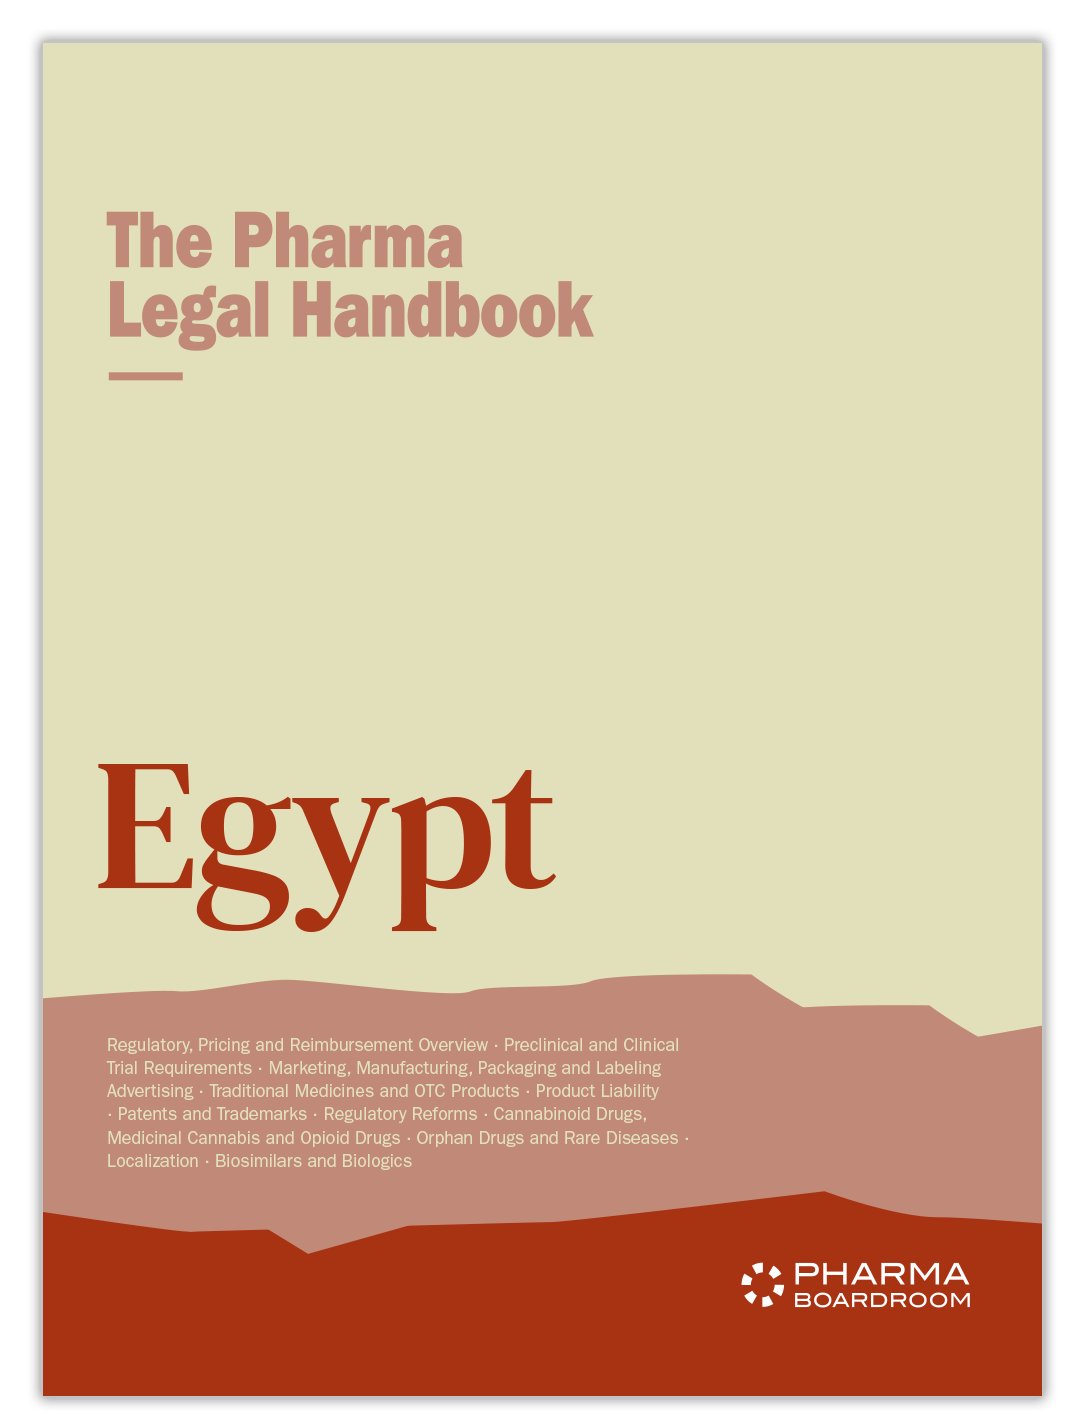 The Pharma Legal Handbook: Egypt